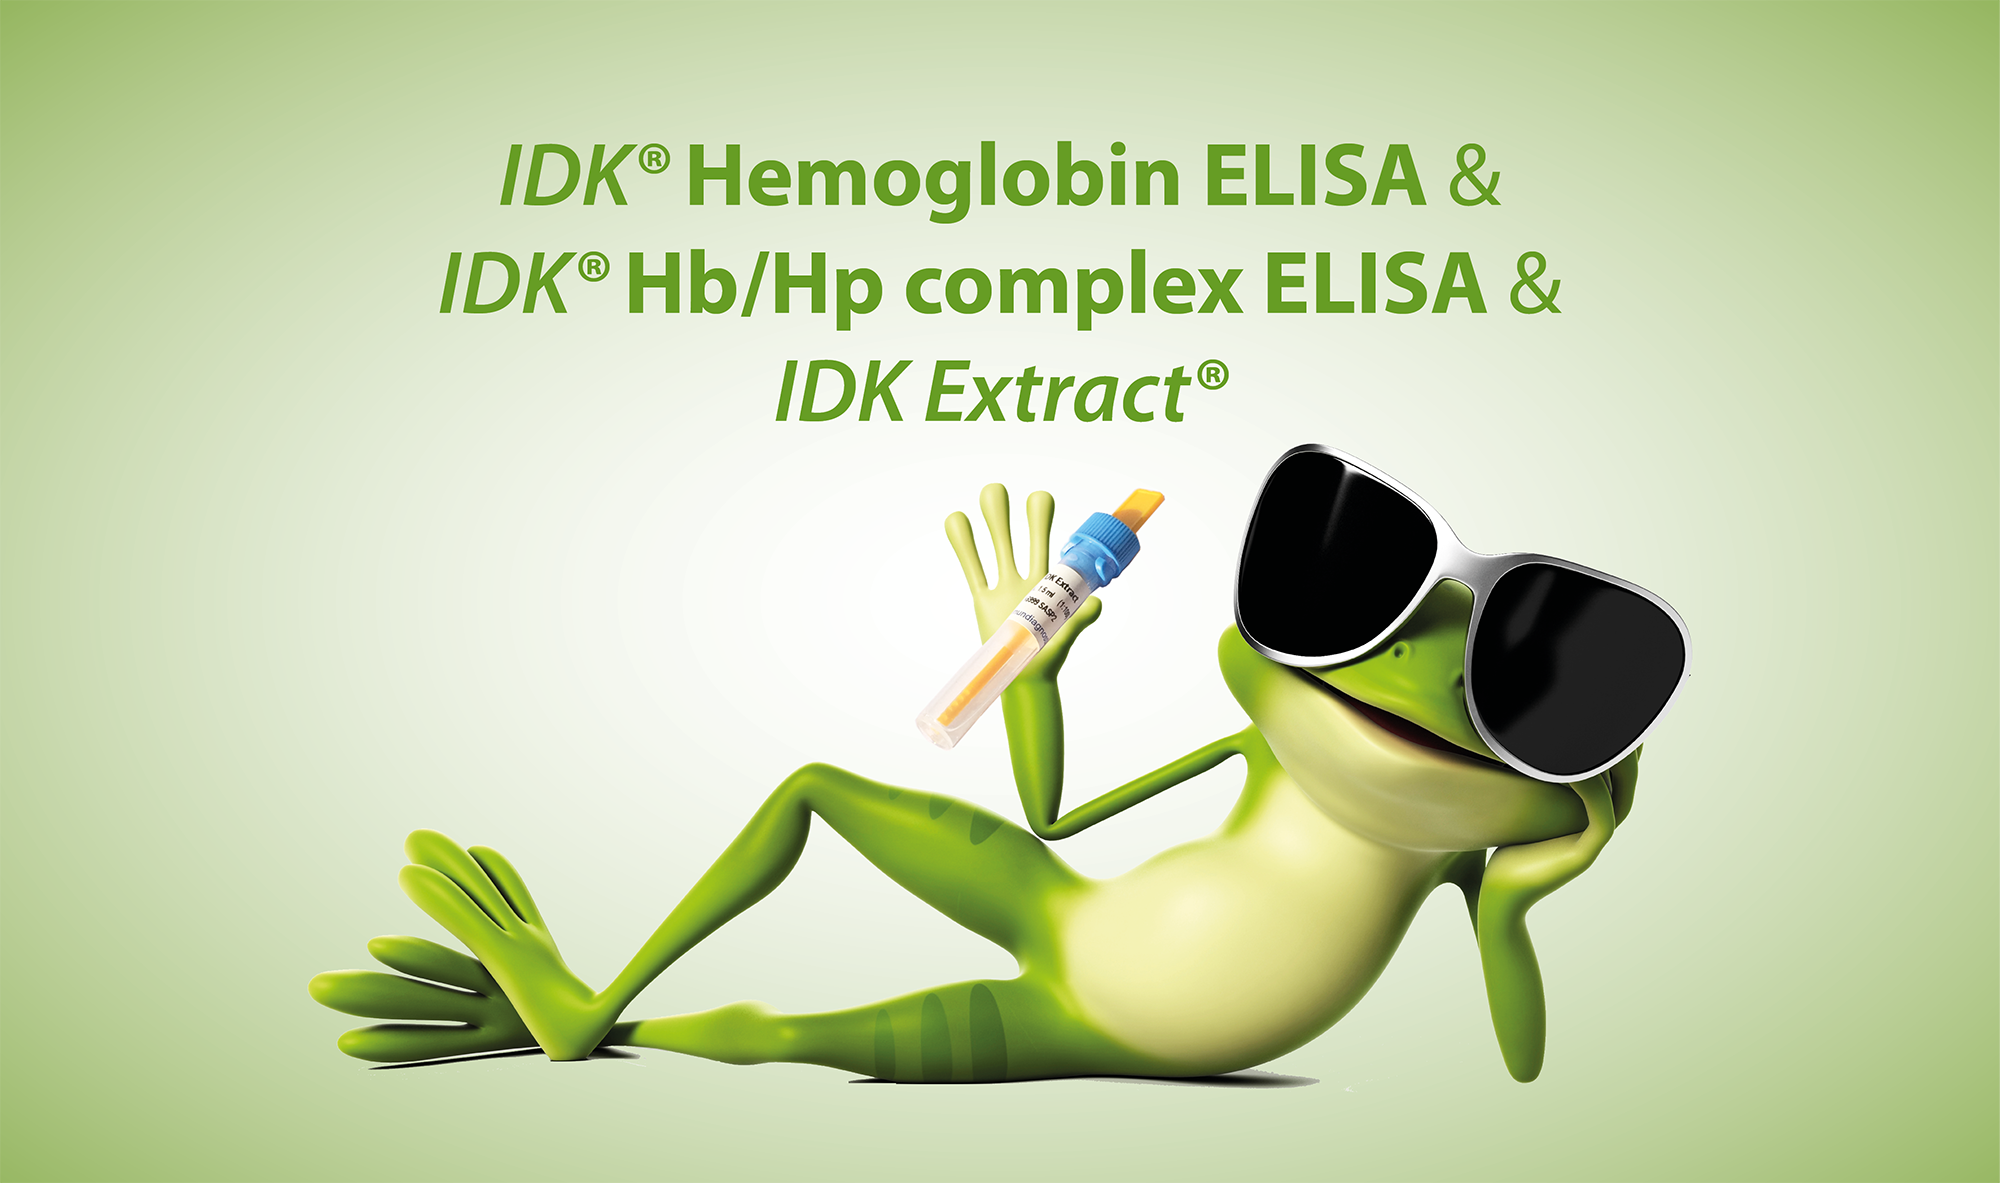 IDK Hemoglobin ELISA and IDK Extract